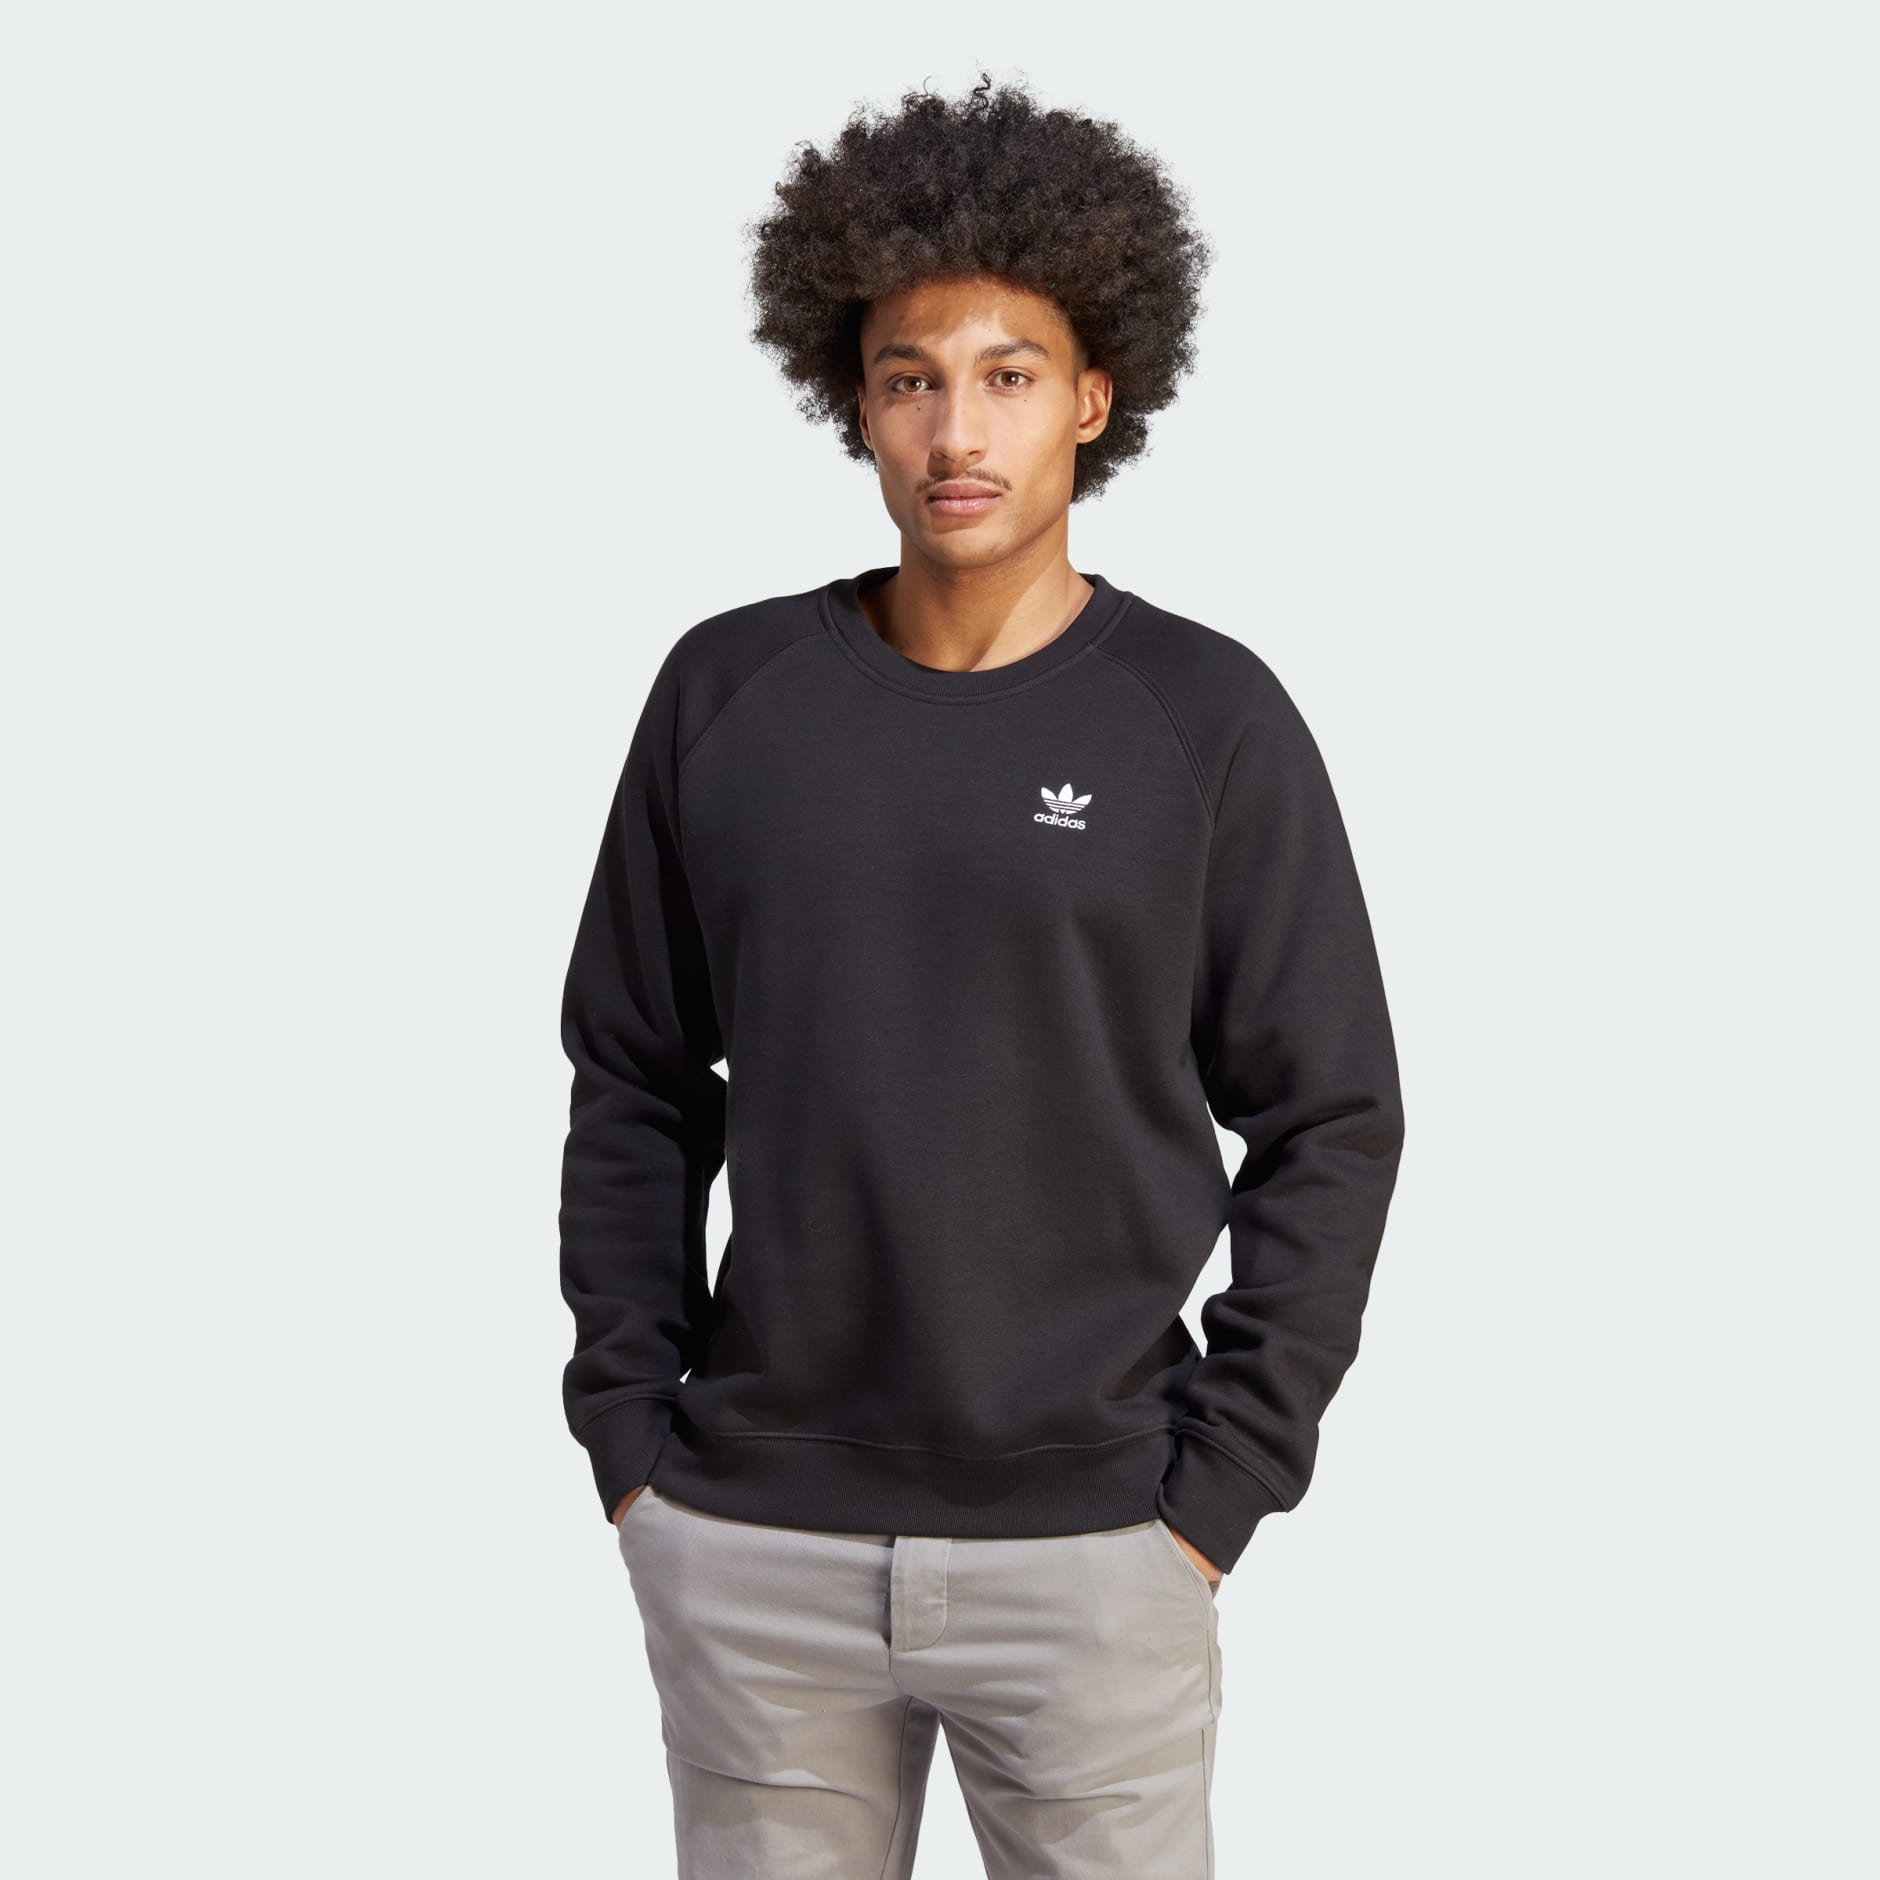 Clothing Men\'s - Trefoil Black | adidas - Crewneck Essentials Oman